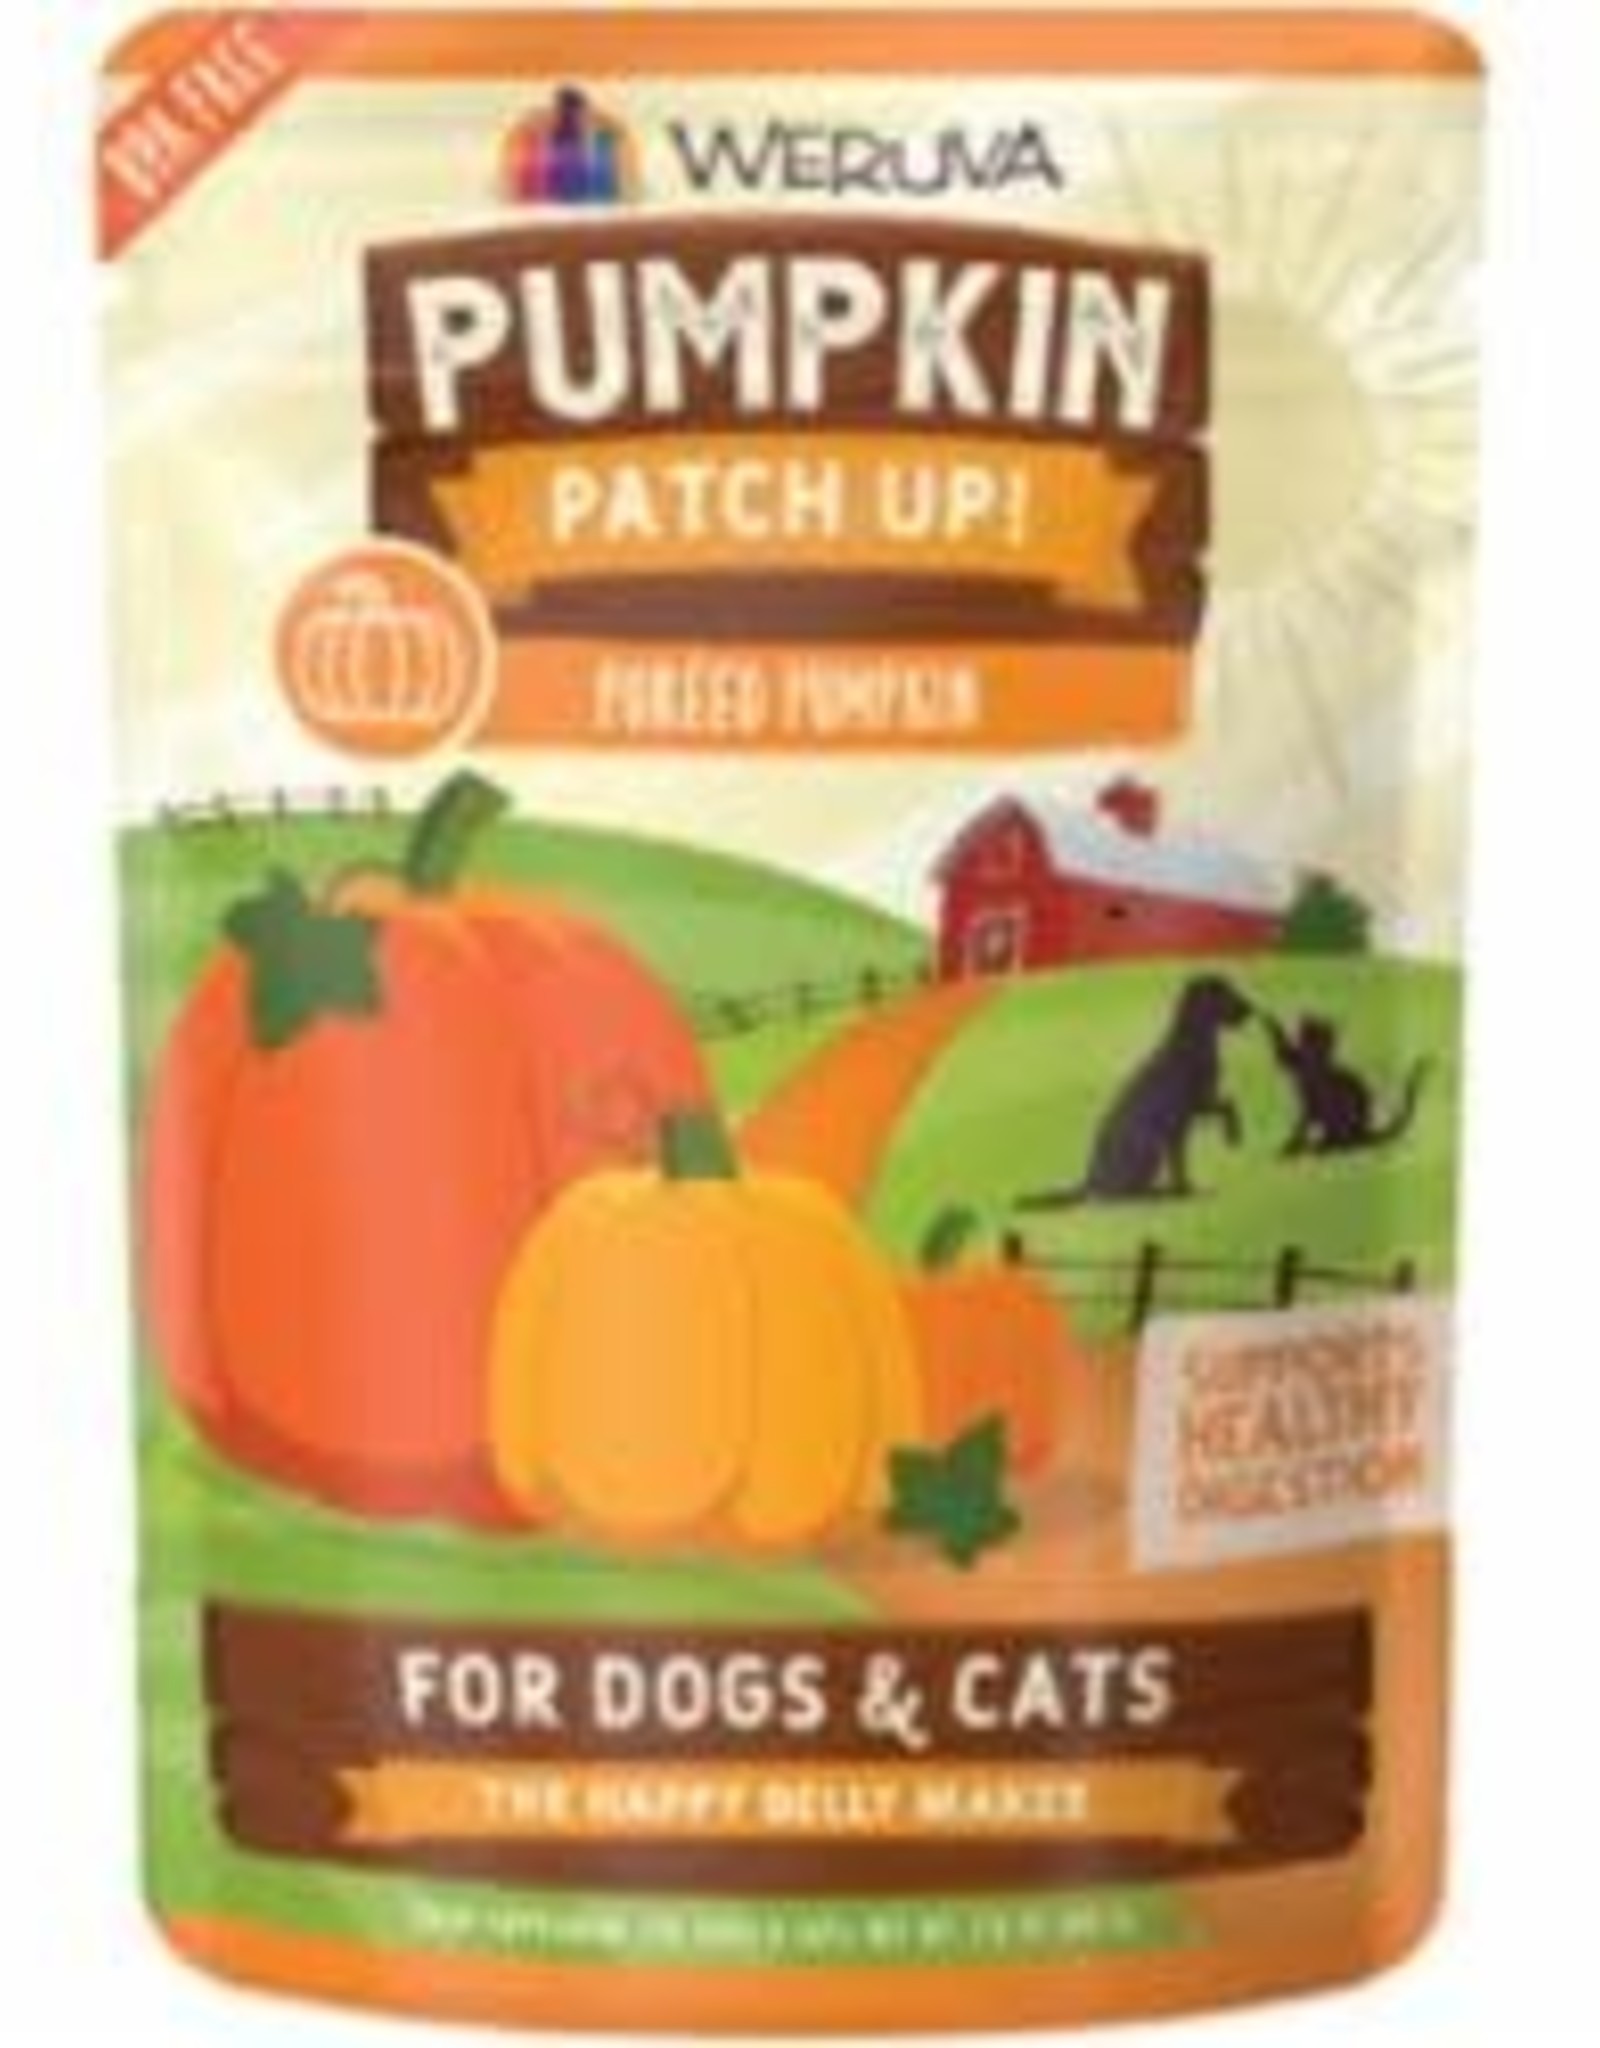 Weruva Weruva Dog & Cat Pumpkin Patch Up Pouches GF 2.80 oz 12/Sleeve